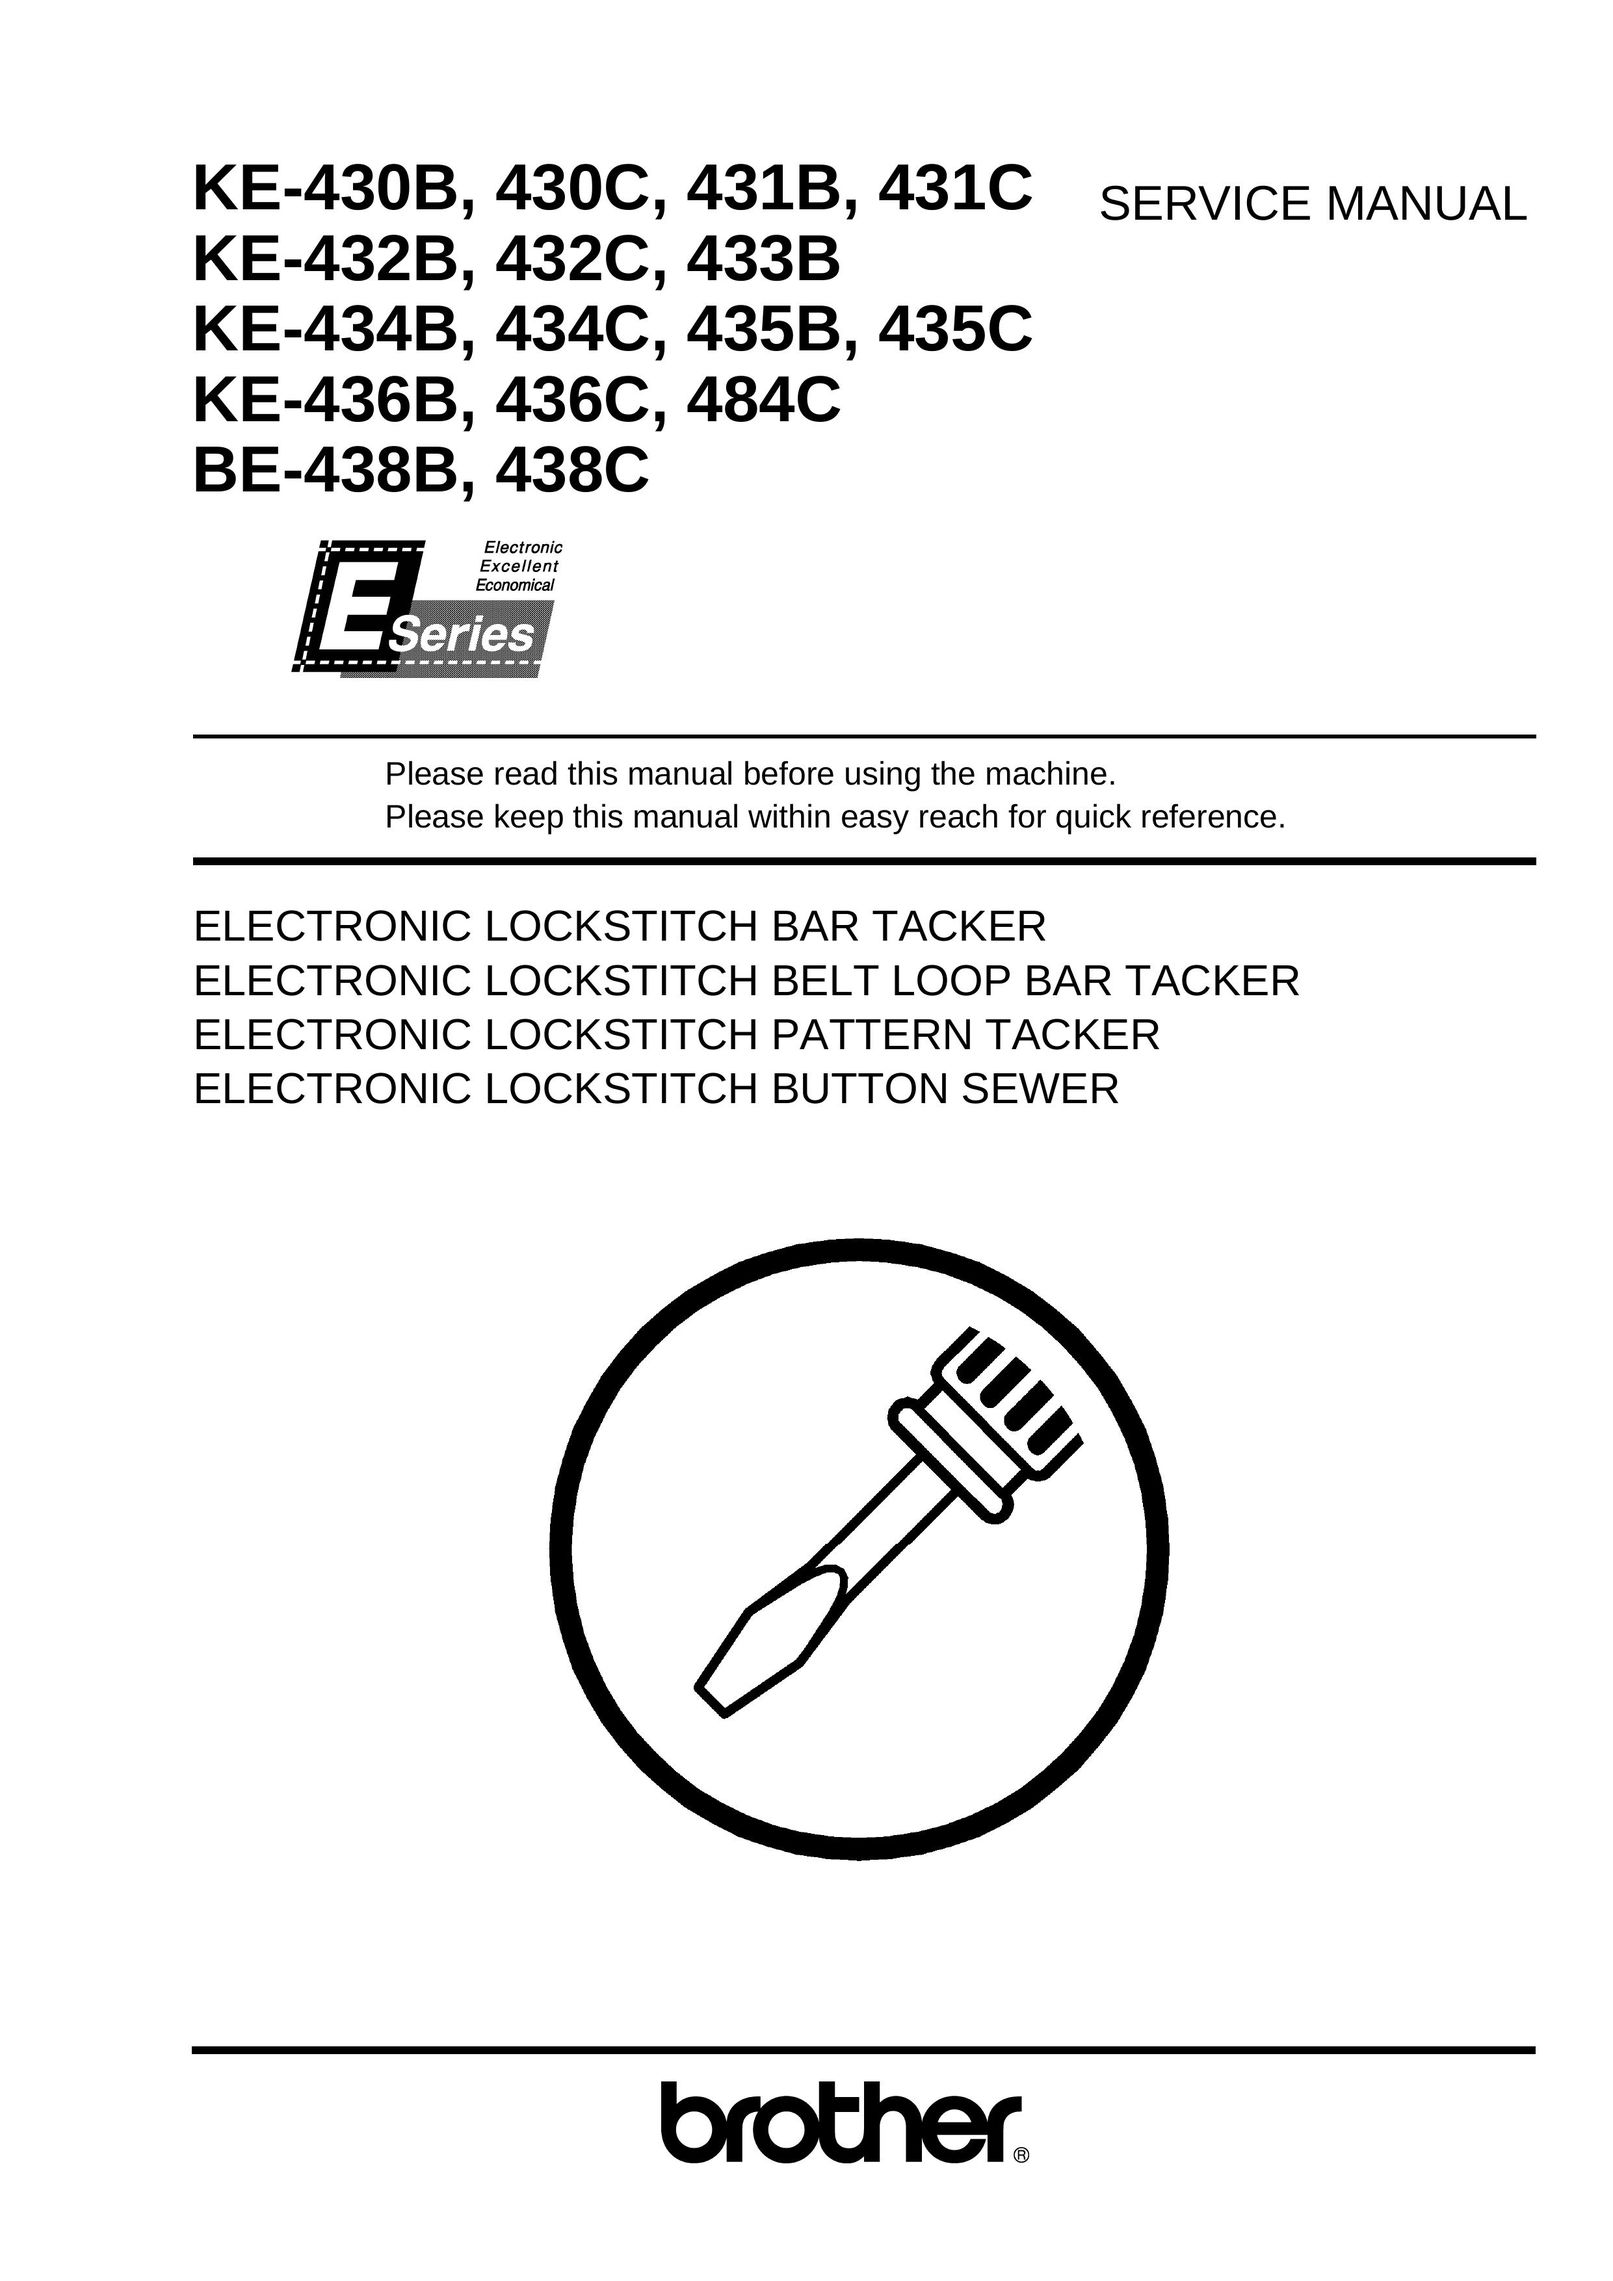 Brother 435B Sewing Machine User Manual